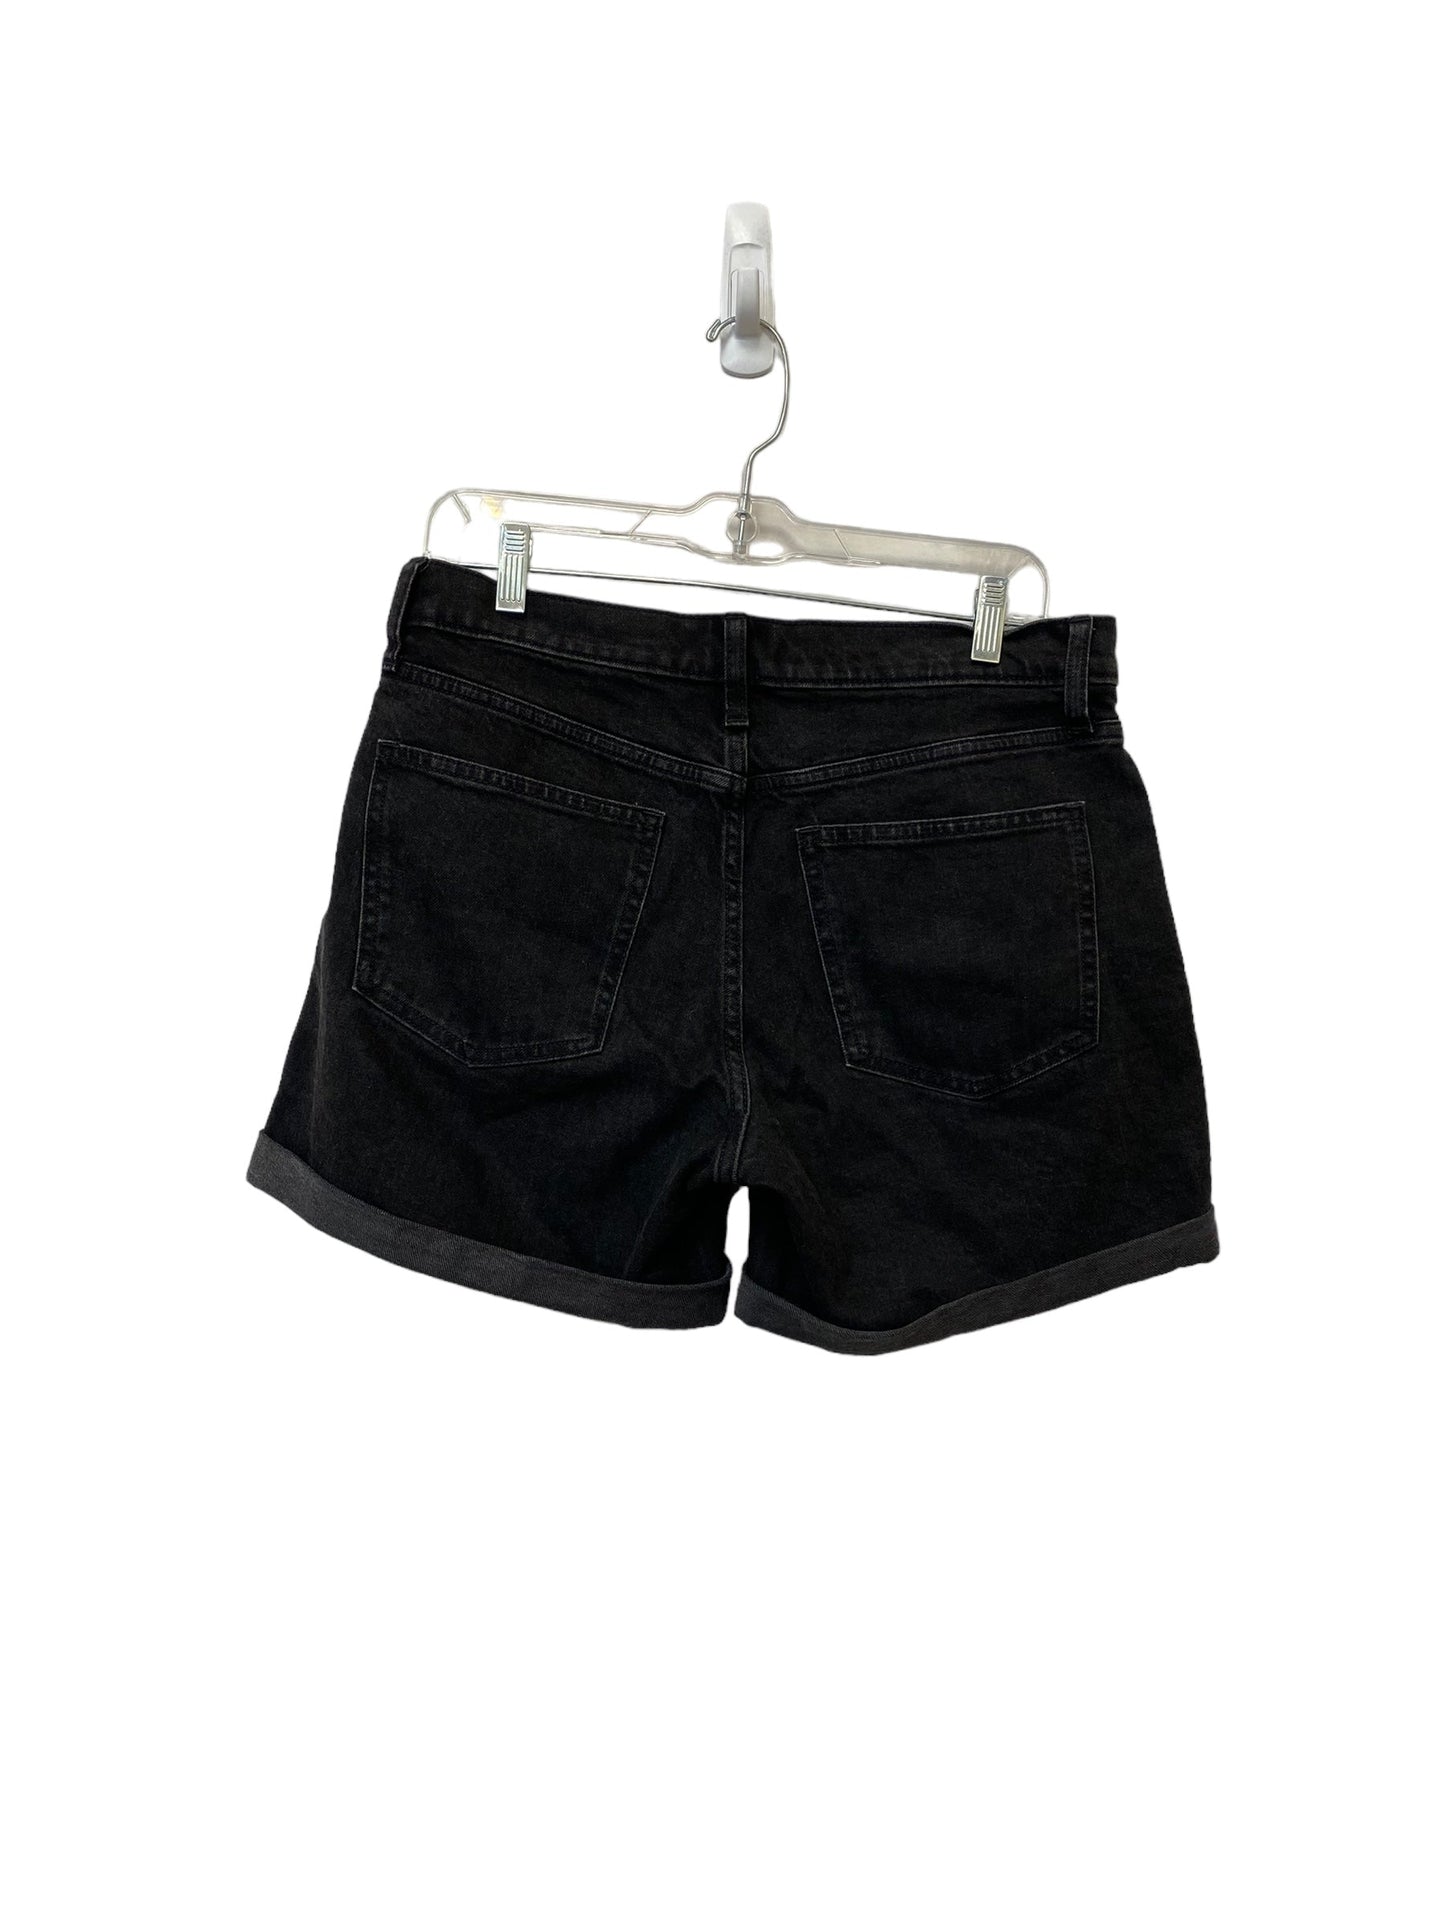 Black Shorts Gap, Size 6